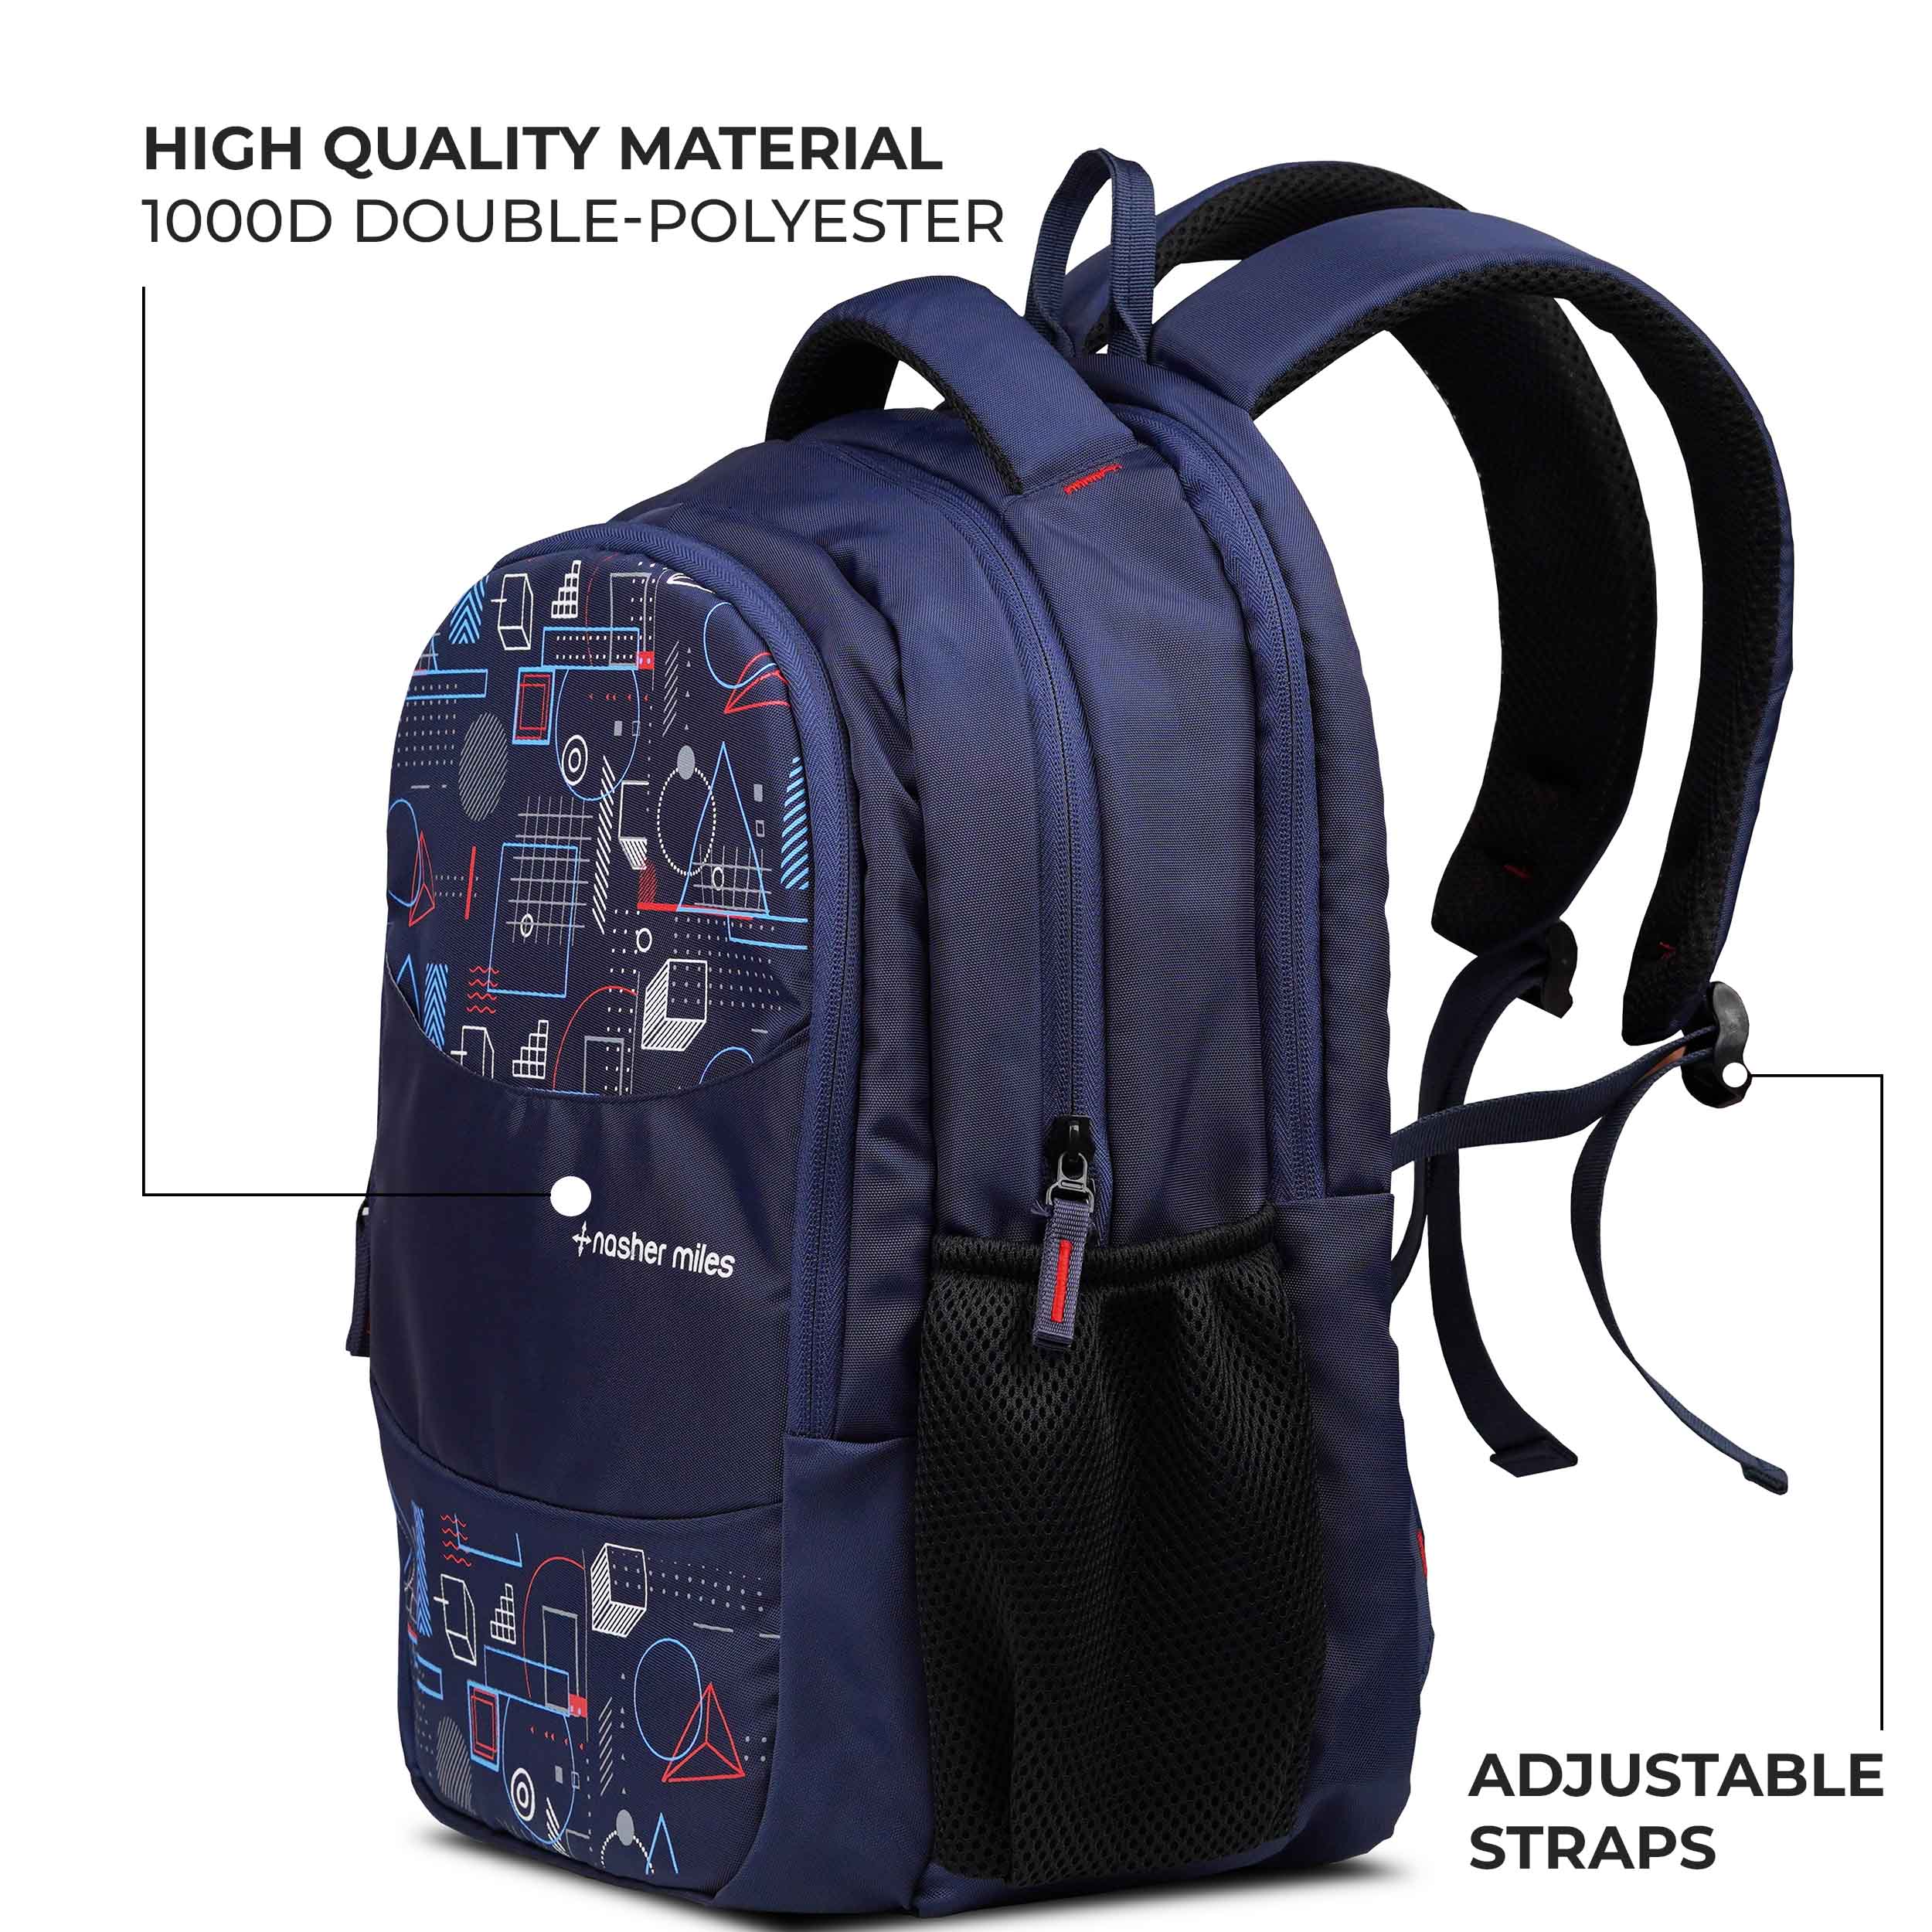 Geometry Backpack